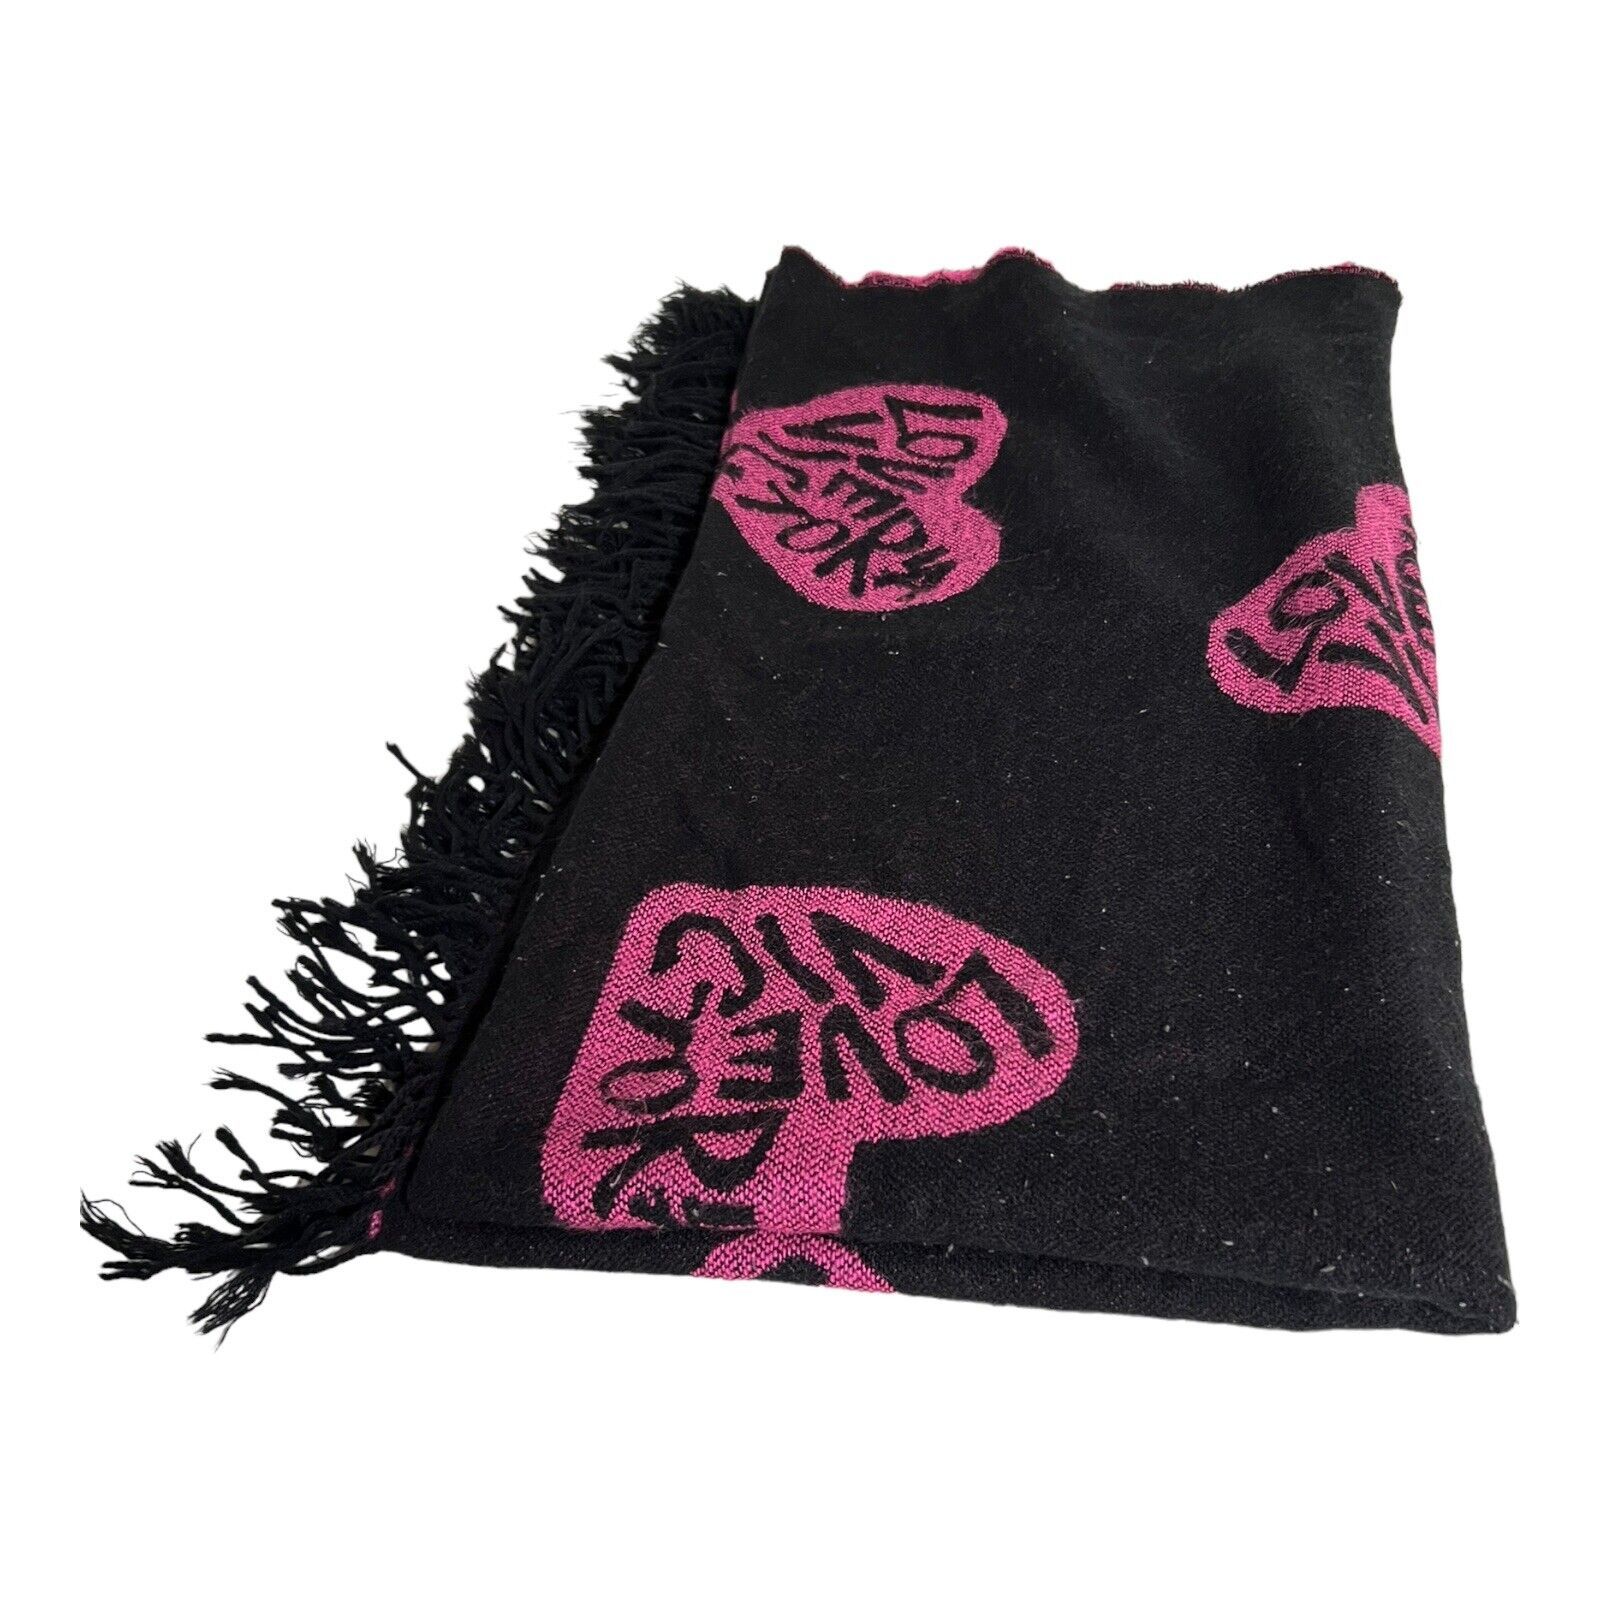 Victoria's Secret Black Pink Love Throw Blanket Tapestry Valentines Day Gift - $36.45